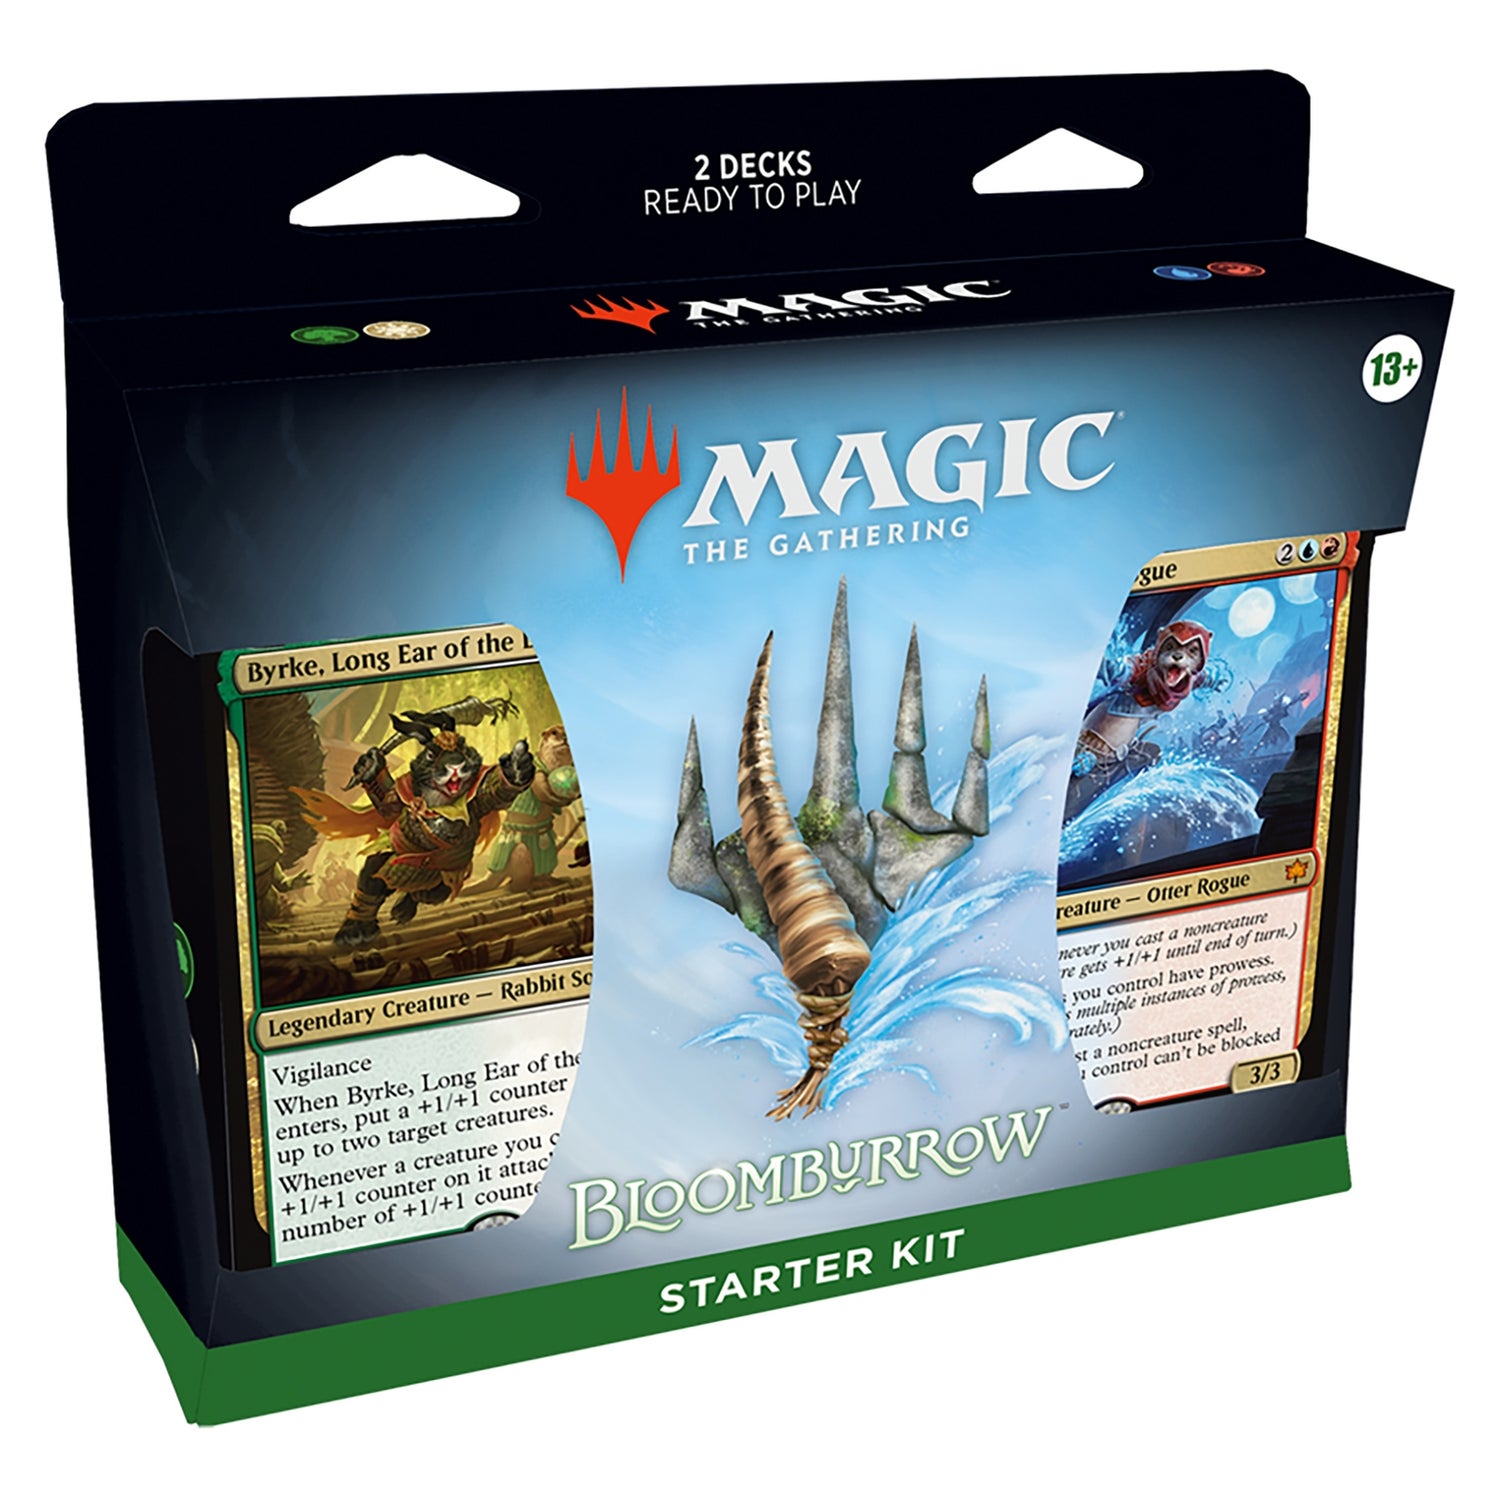 Magic: The Gathering Bloomburrow Starter Kit